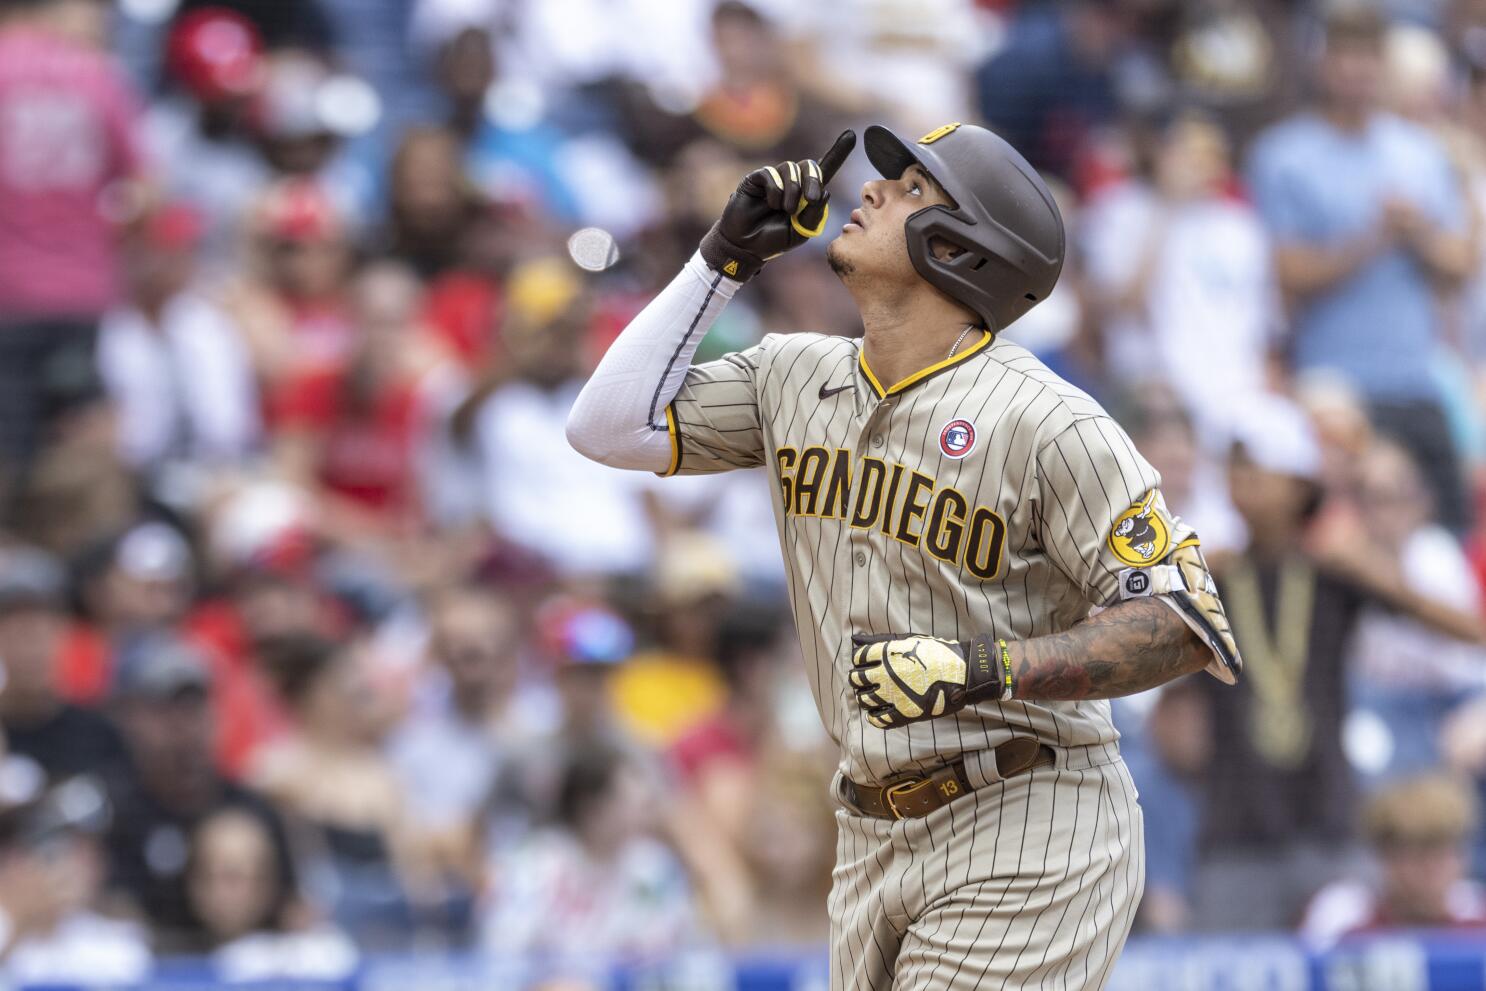 Manny Machado returns to Baltimore with Padres - The San Diego Union-Tribune